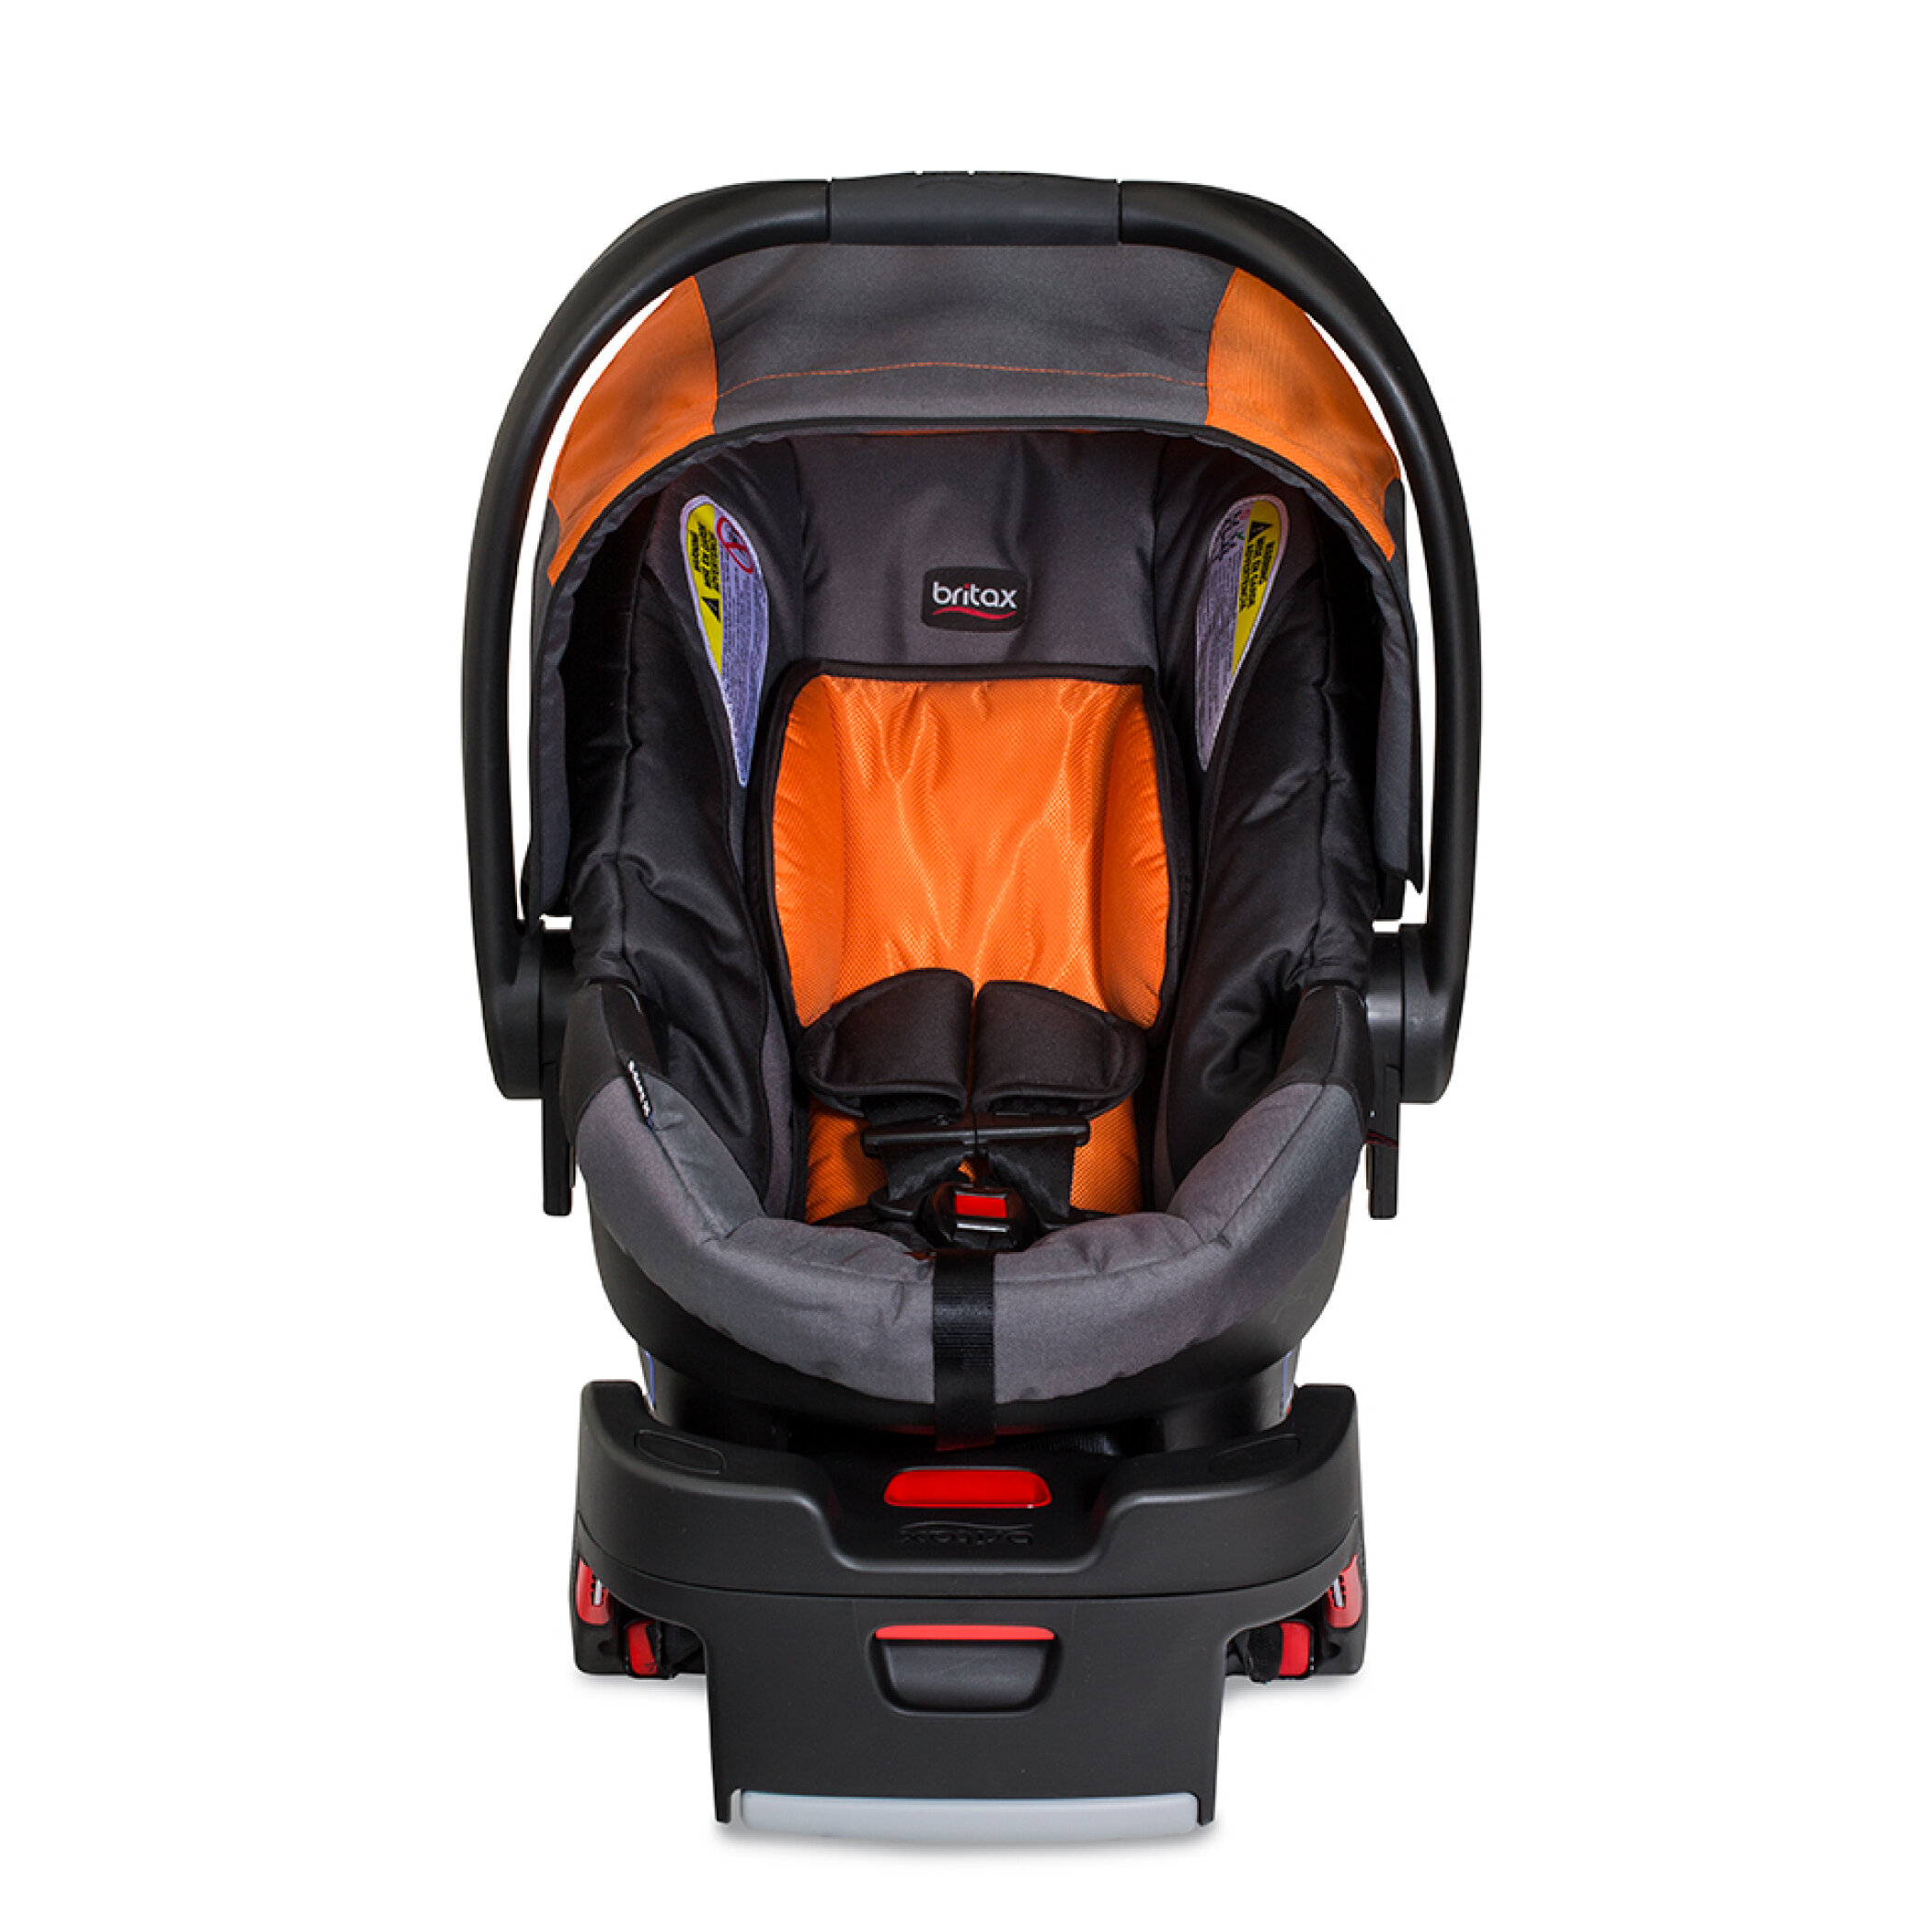 BOB Gear B-Safe 35 by Britax Infant Car Seat, Canyon